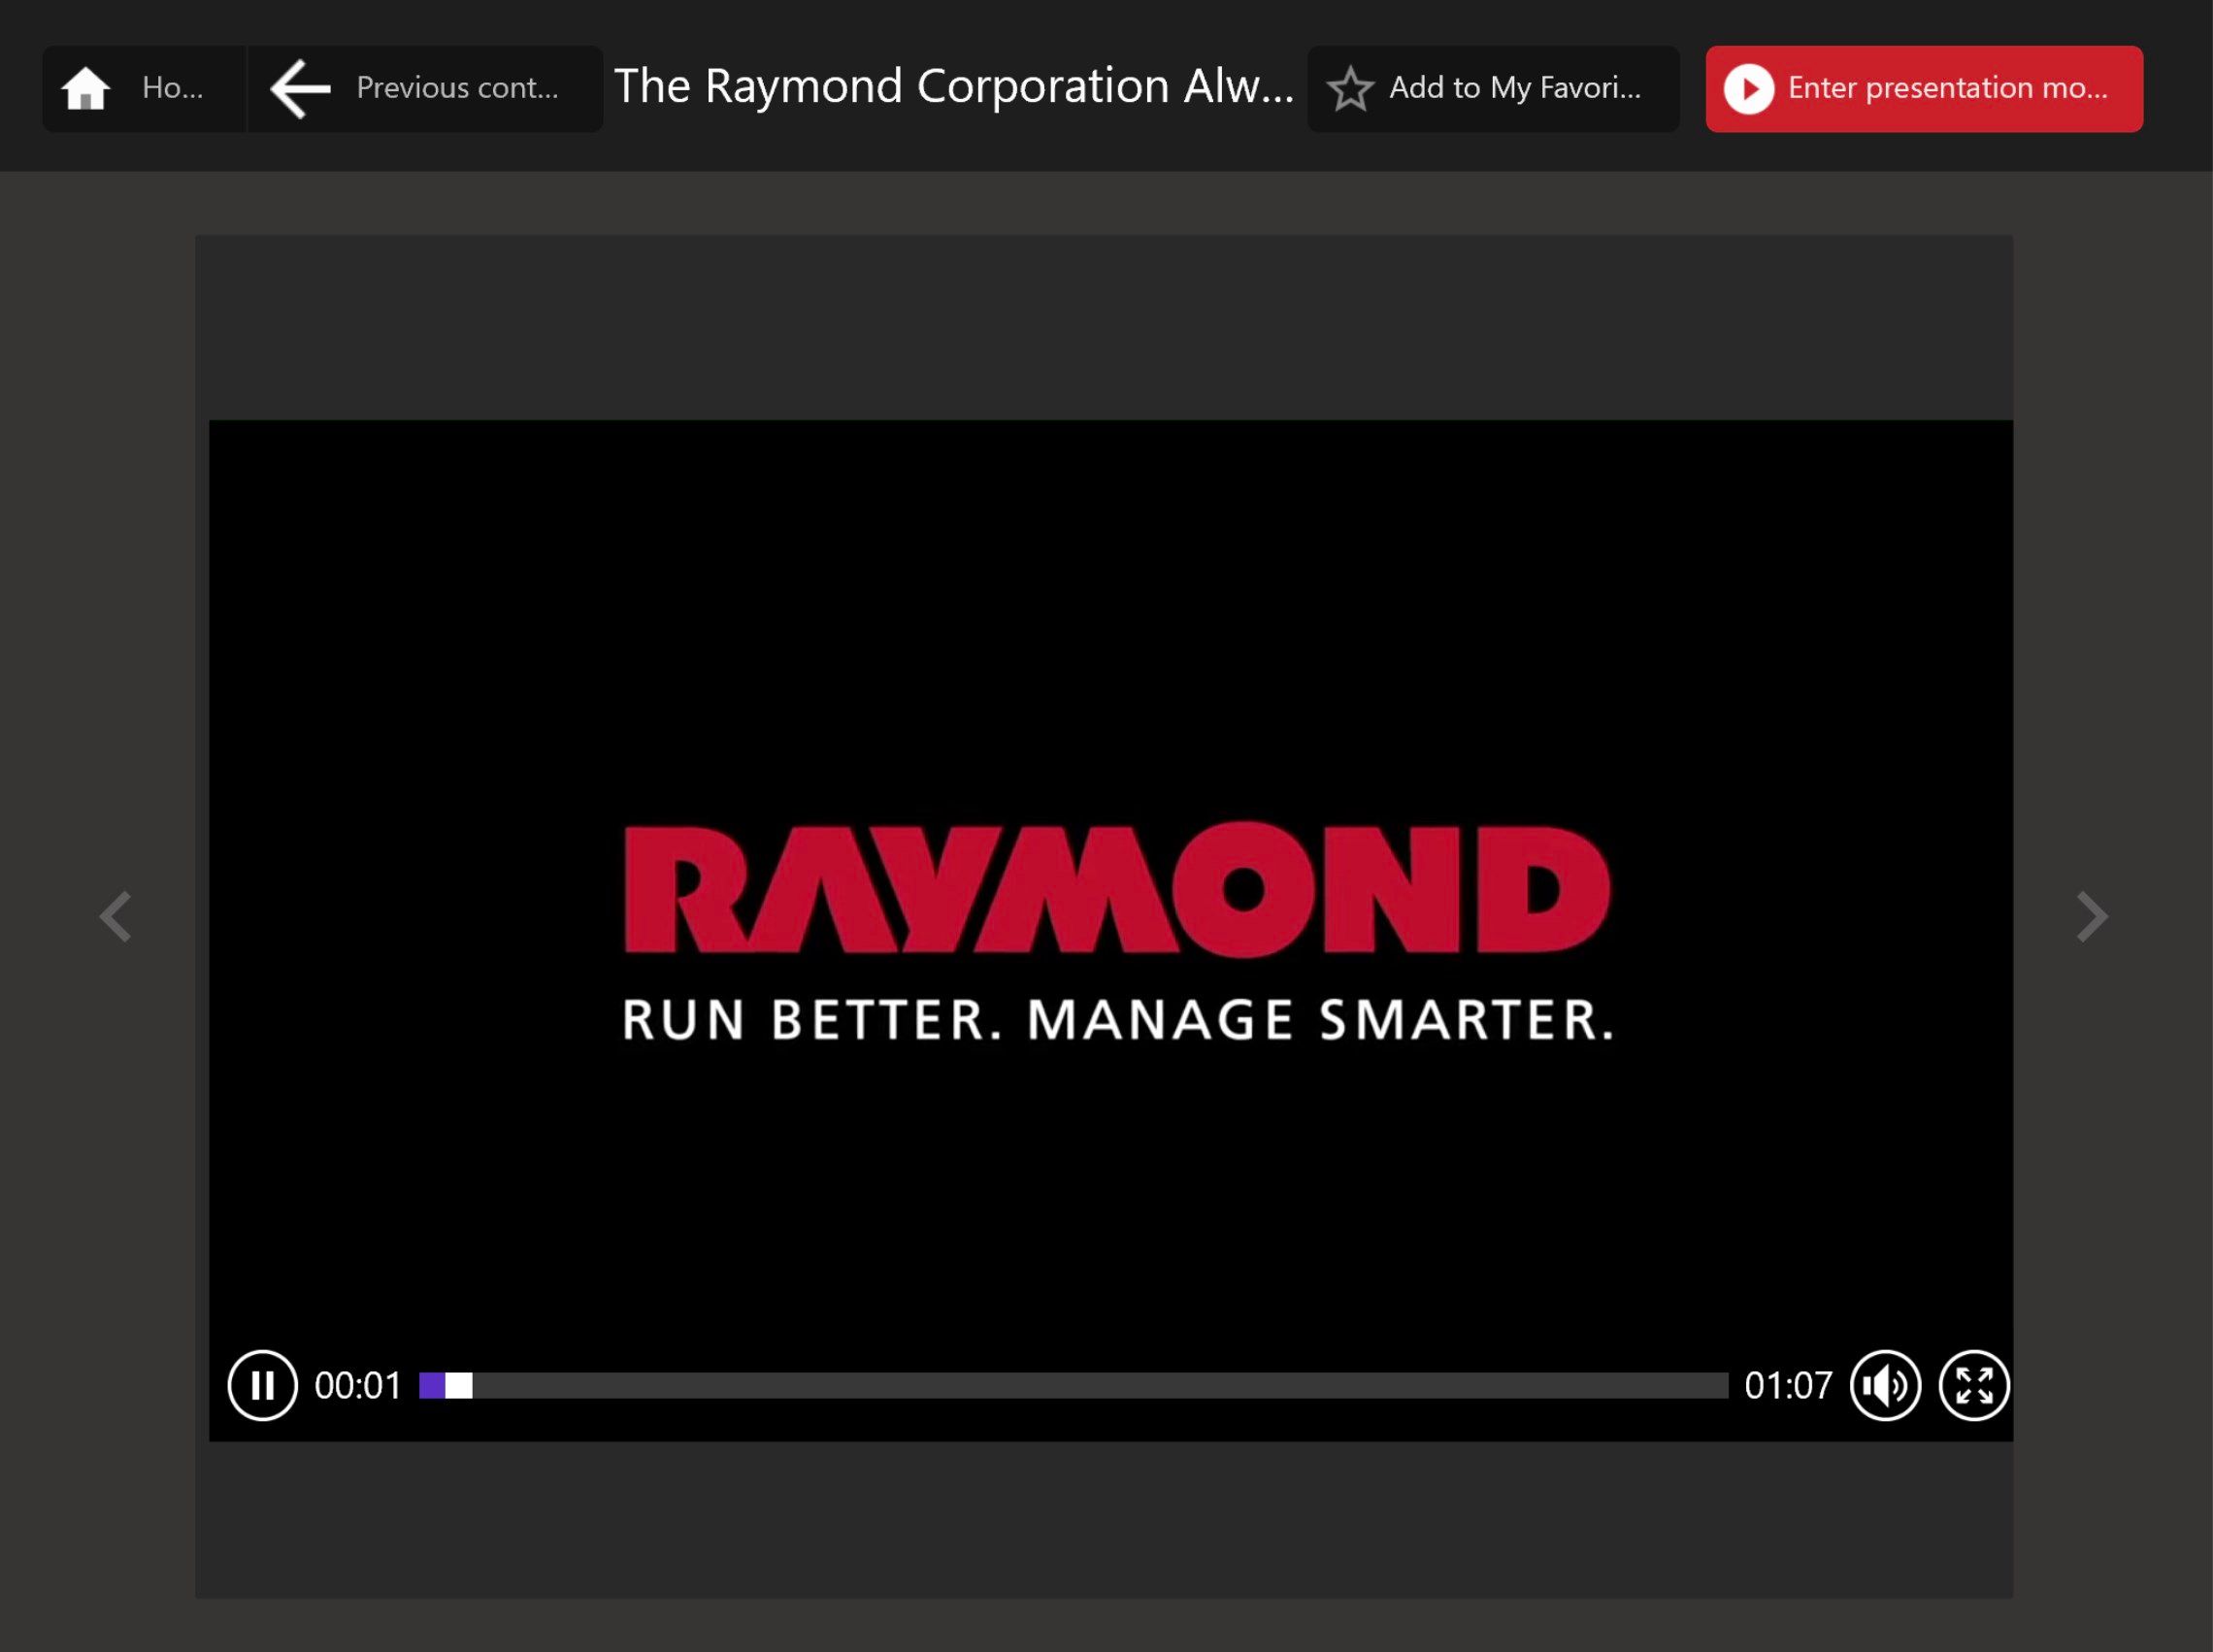 Raymond Conversation Suite